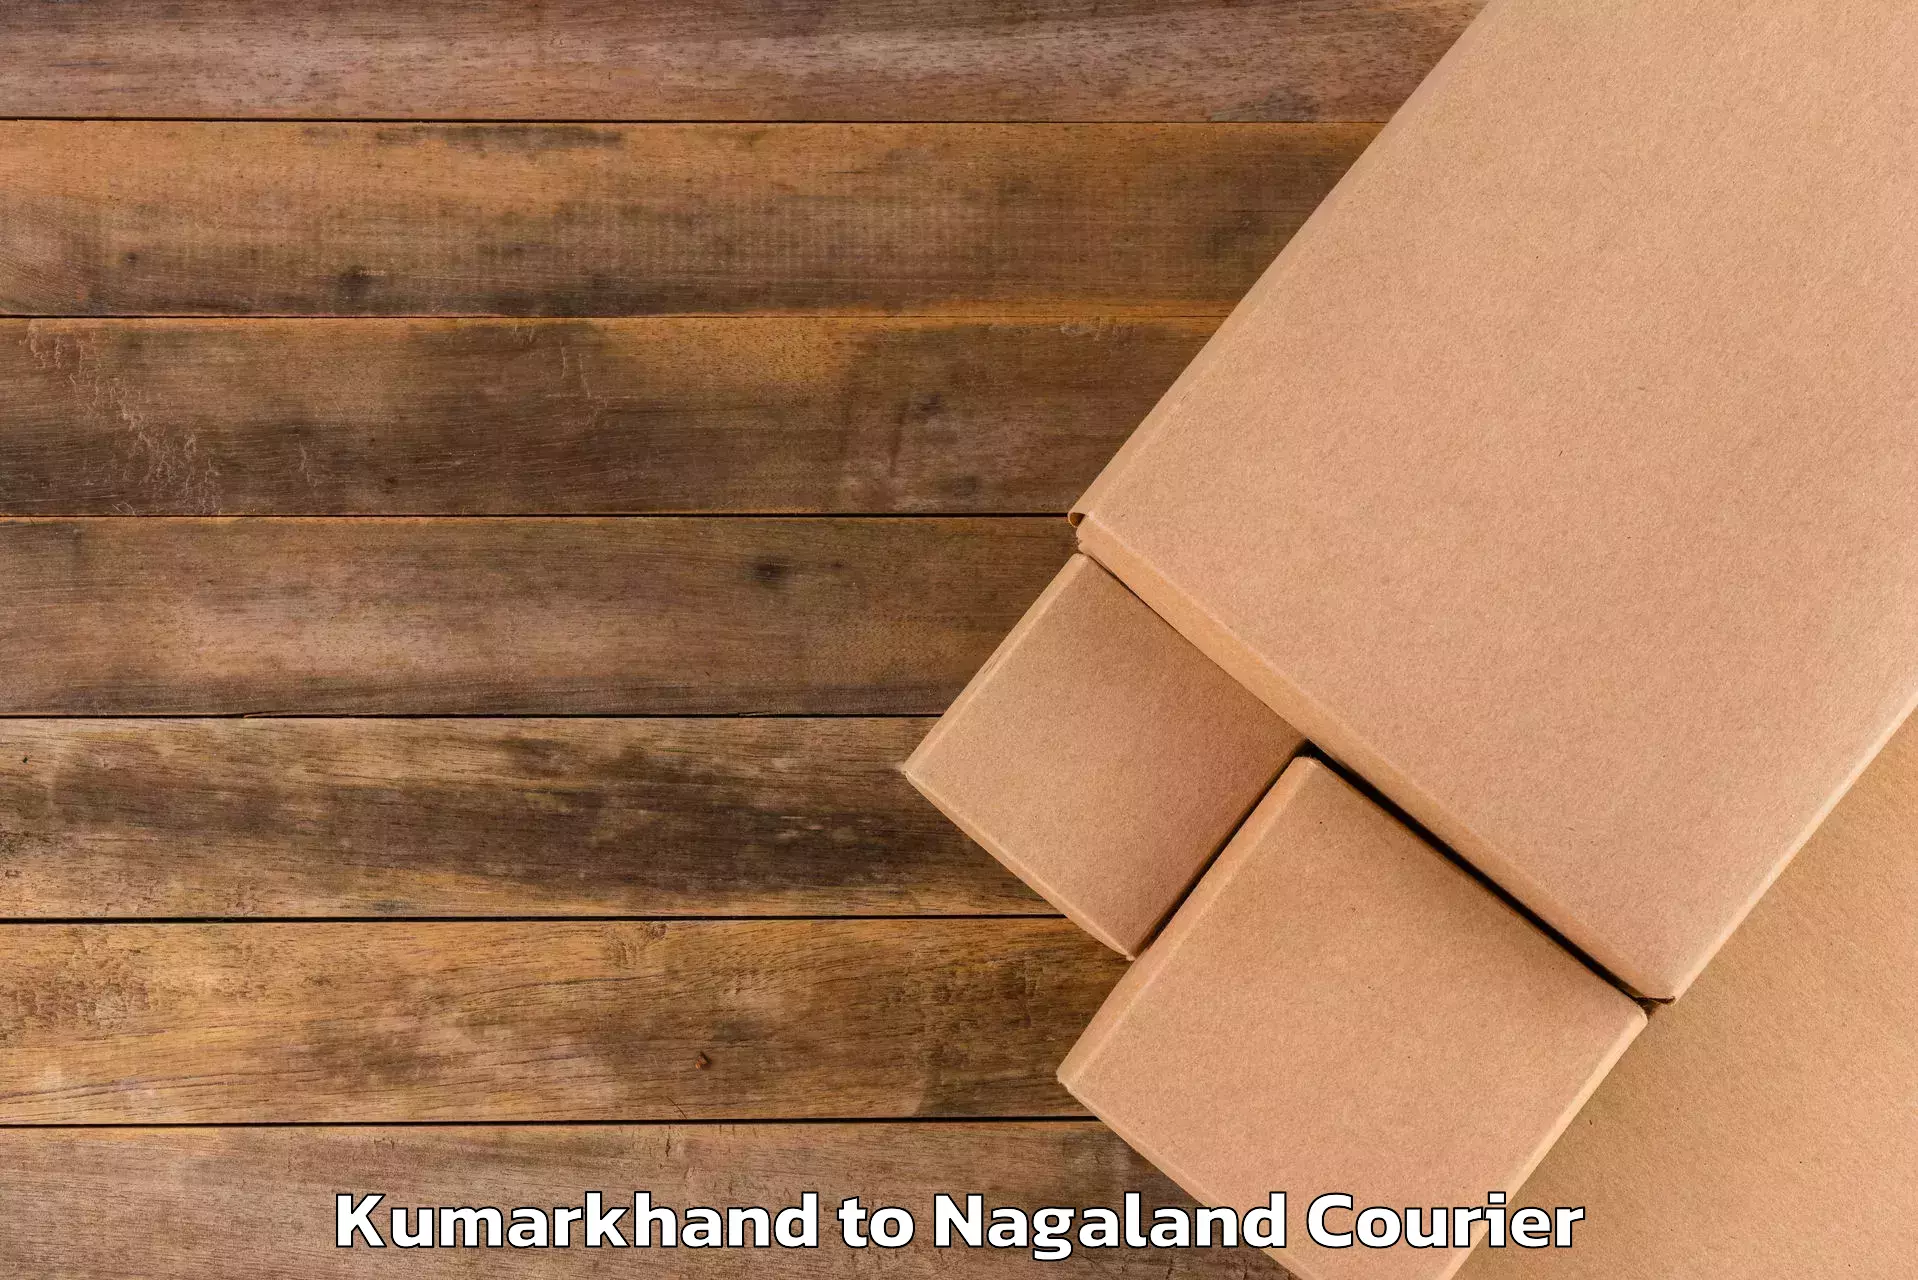 Luggage transport consultancy Kumarkhand to Nagaland